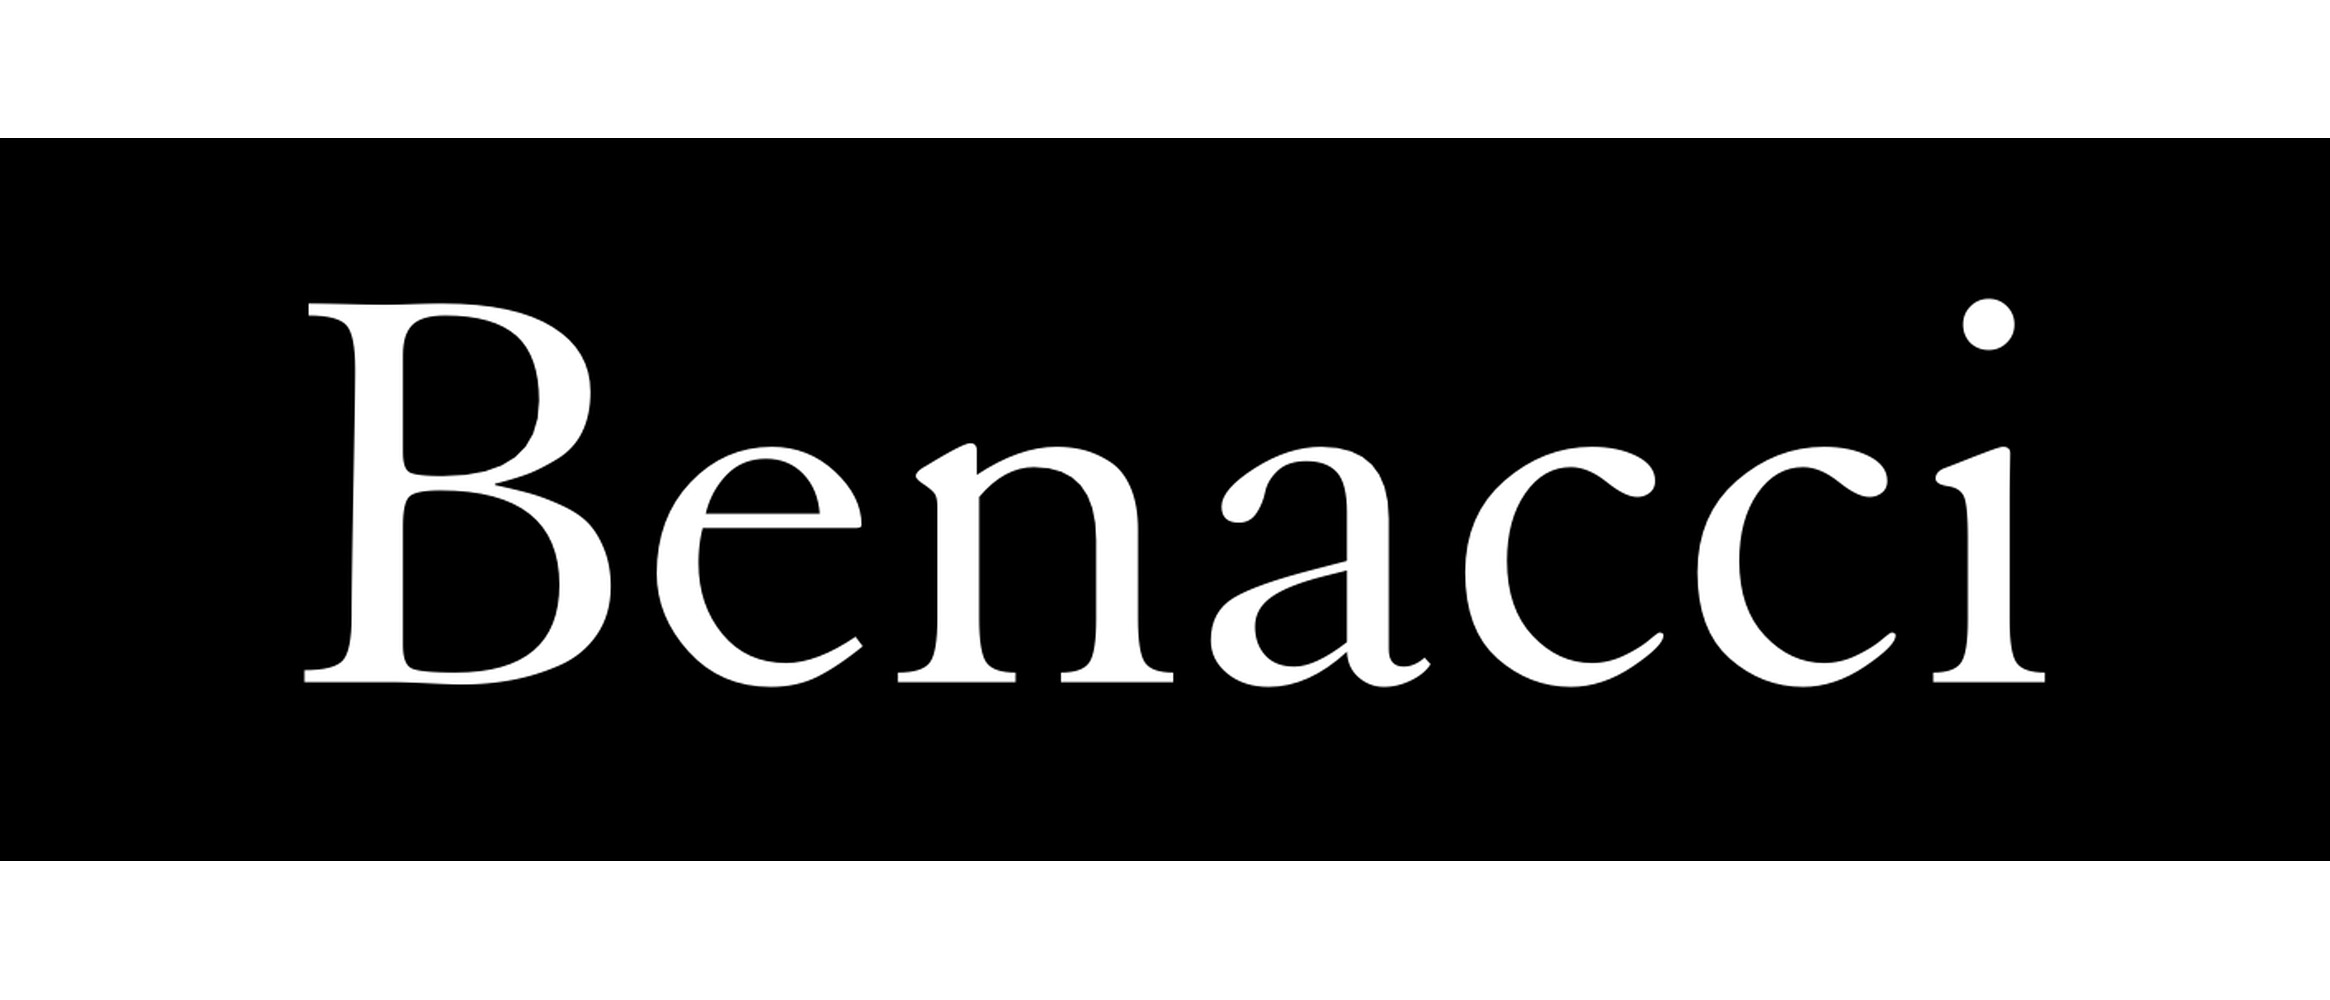 Benacci.com